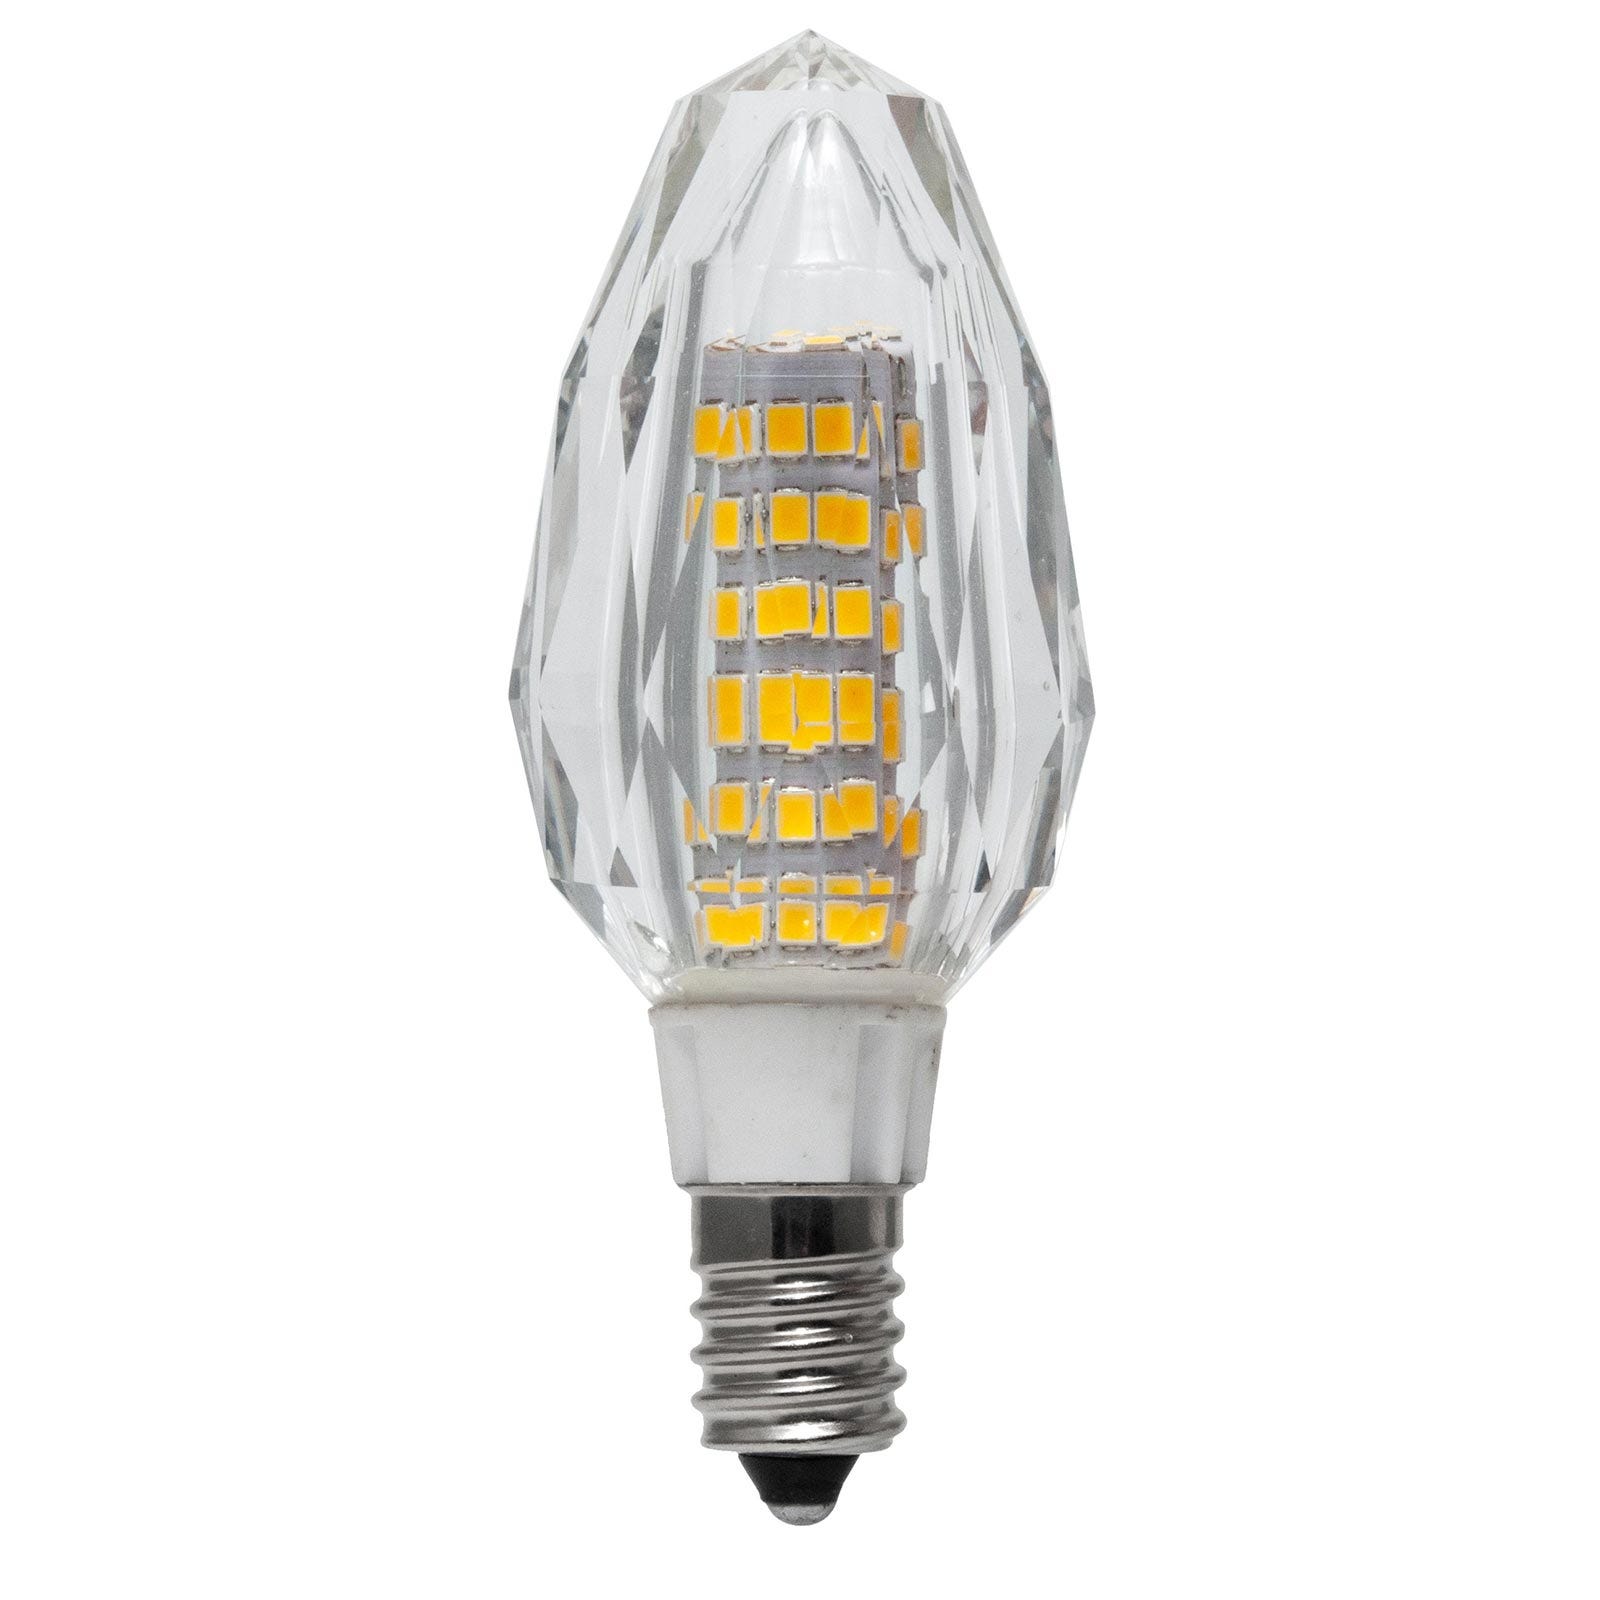 Lampadina LED candela E14 vetro cristallo lampada basso consumo